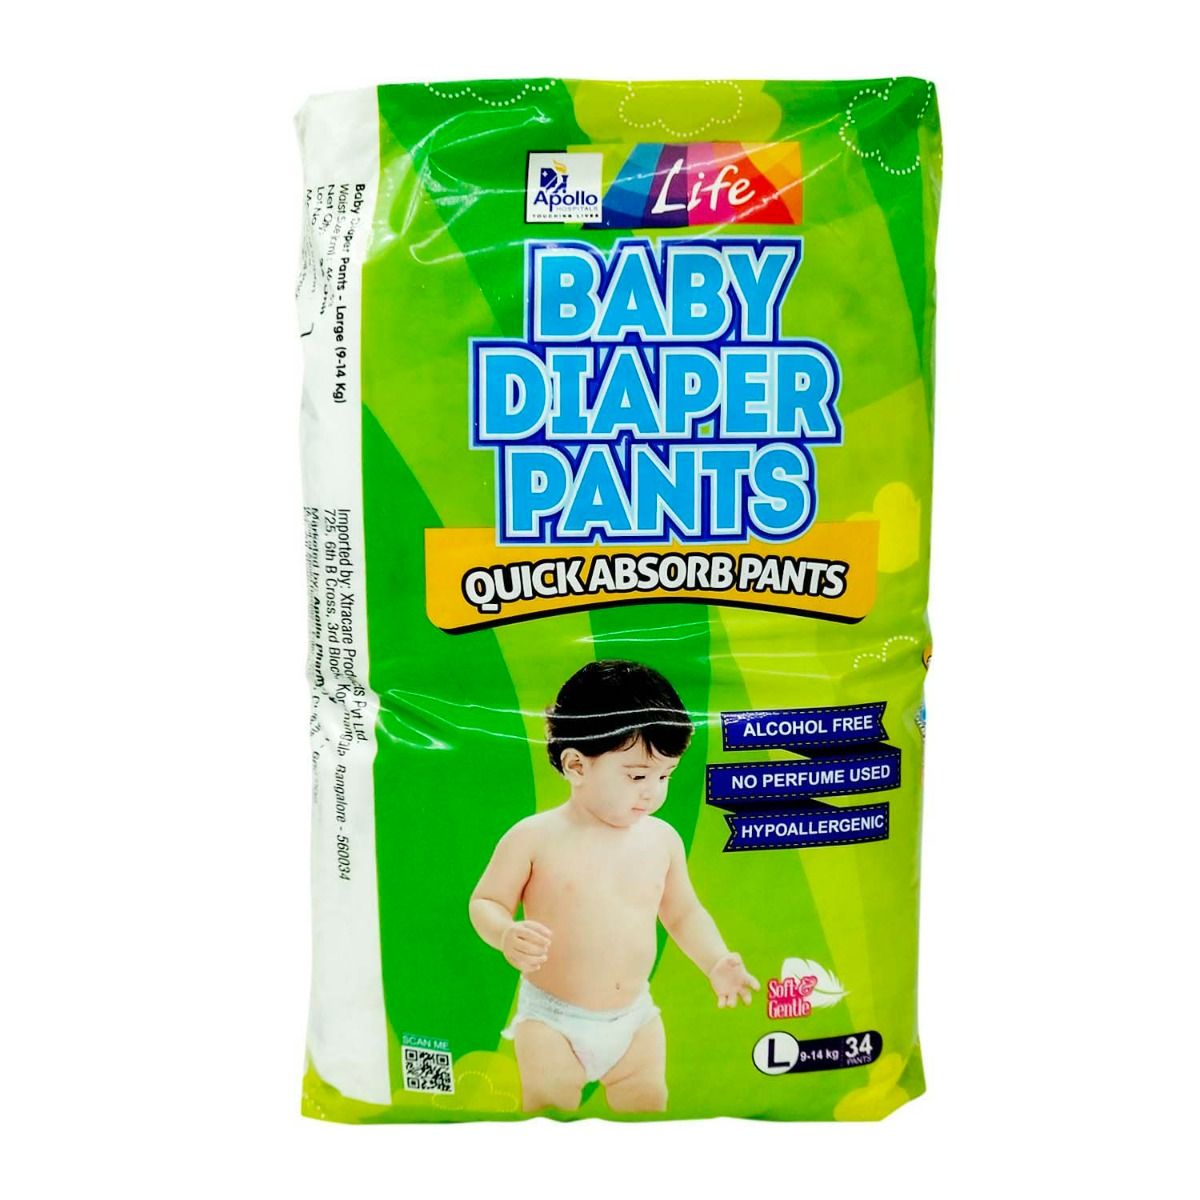 Buy Apollo Life Baby Diaper Pants Large, 34 Count Online